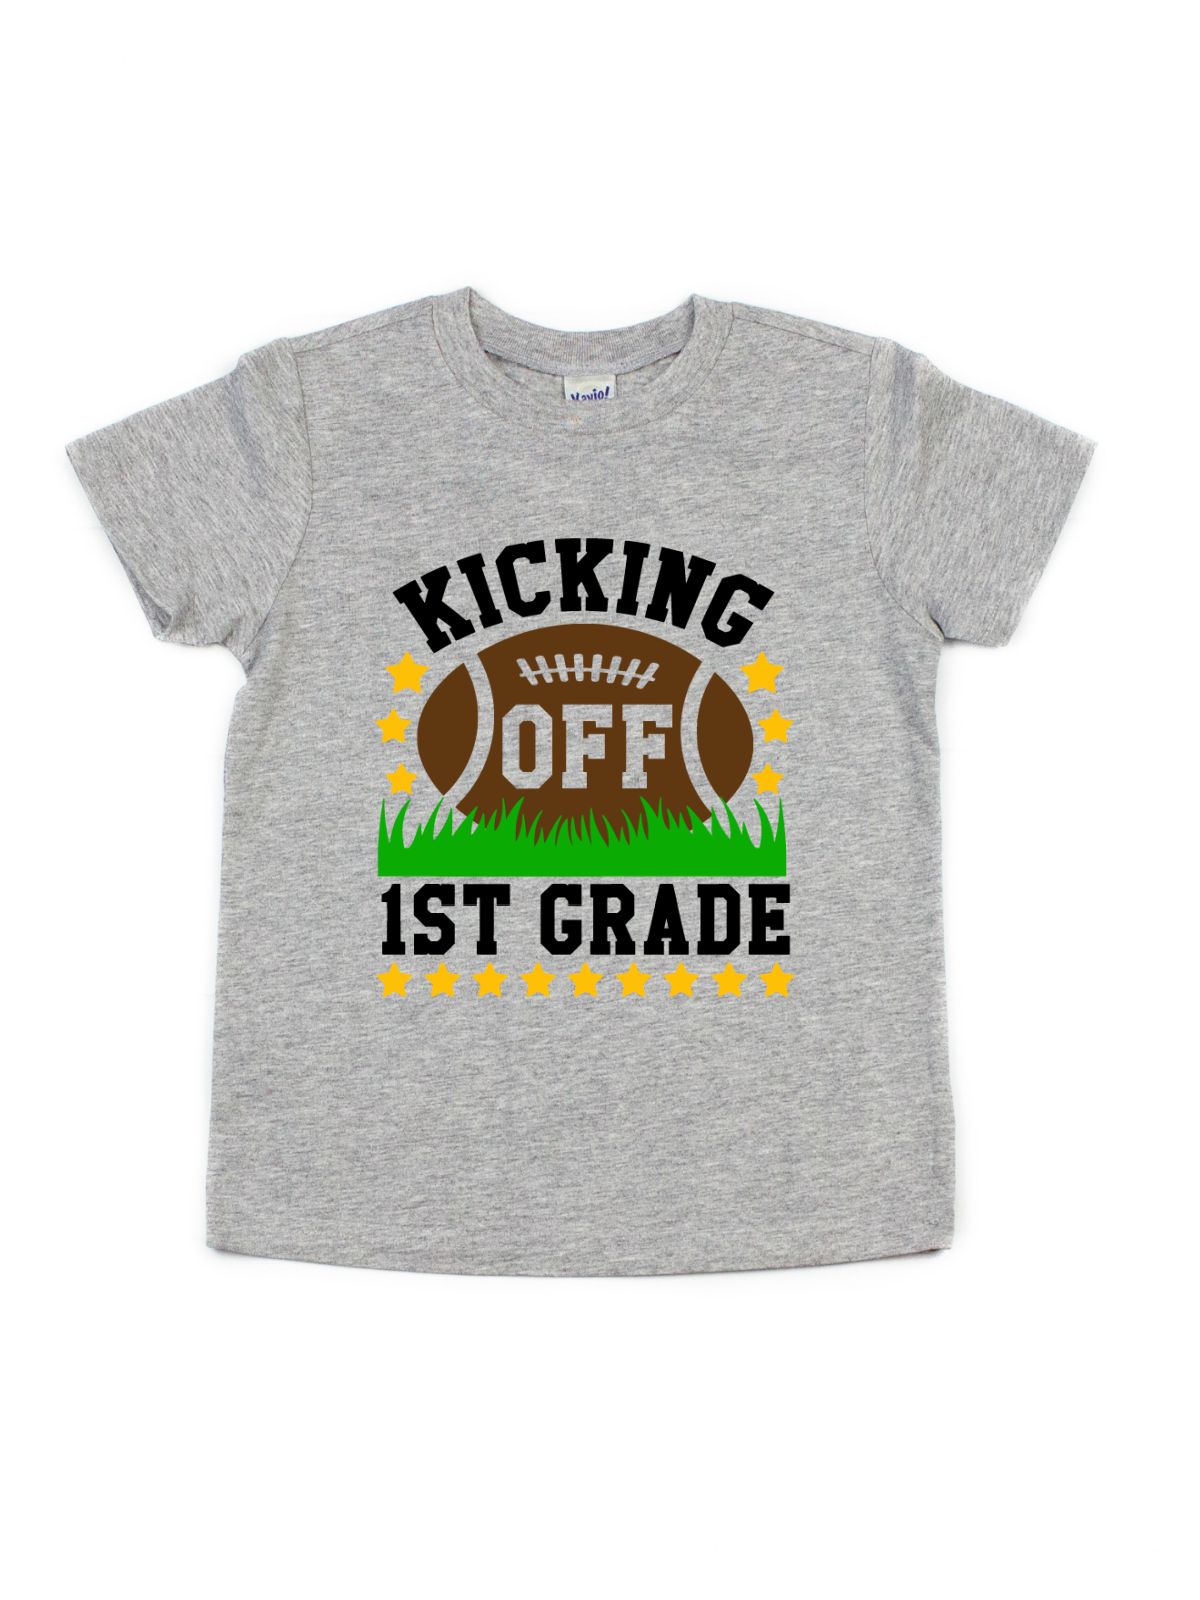 Kickin' Off Football Kids Shirt - White - All Grades